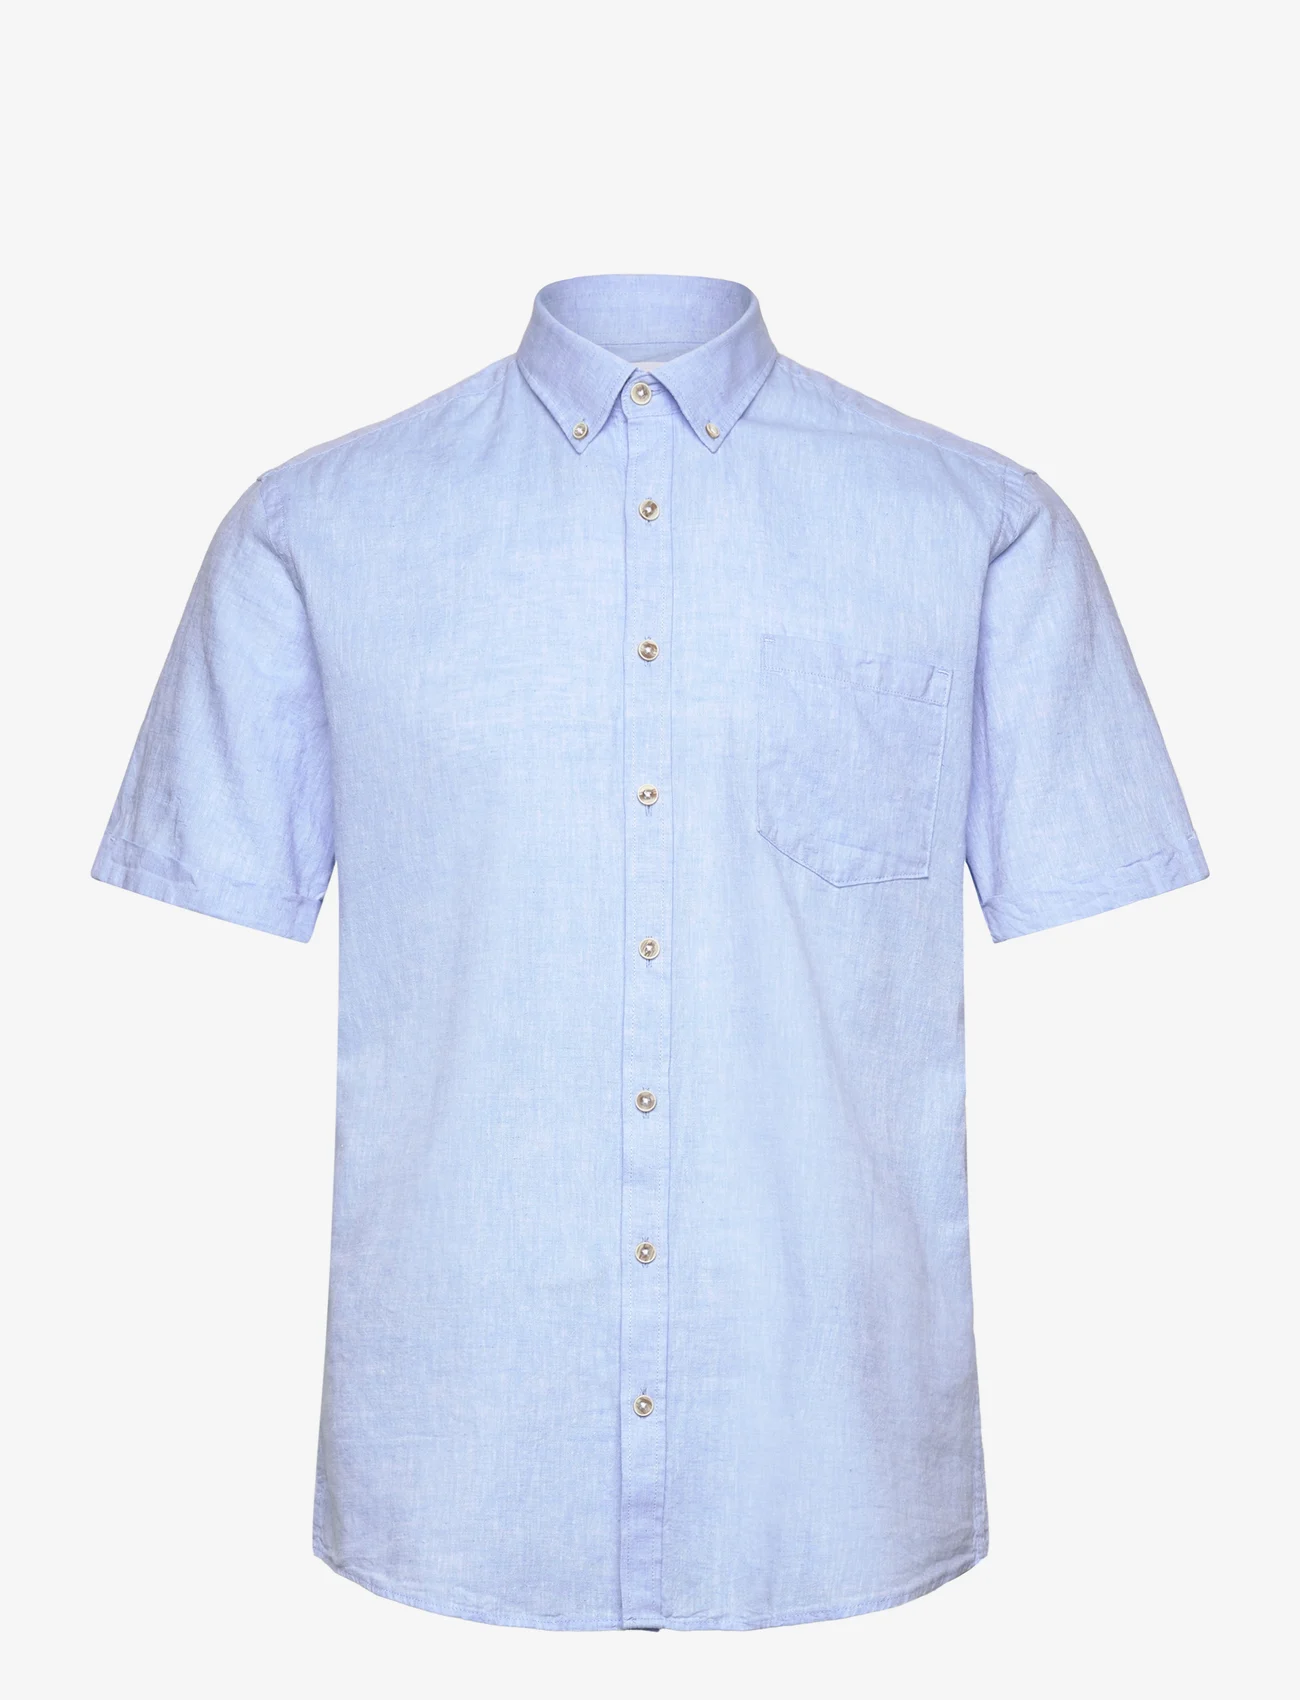 Lindbergh - Cotton/linen shirt S/S - linneskjortor - sky blue - 0